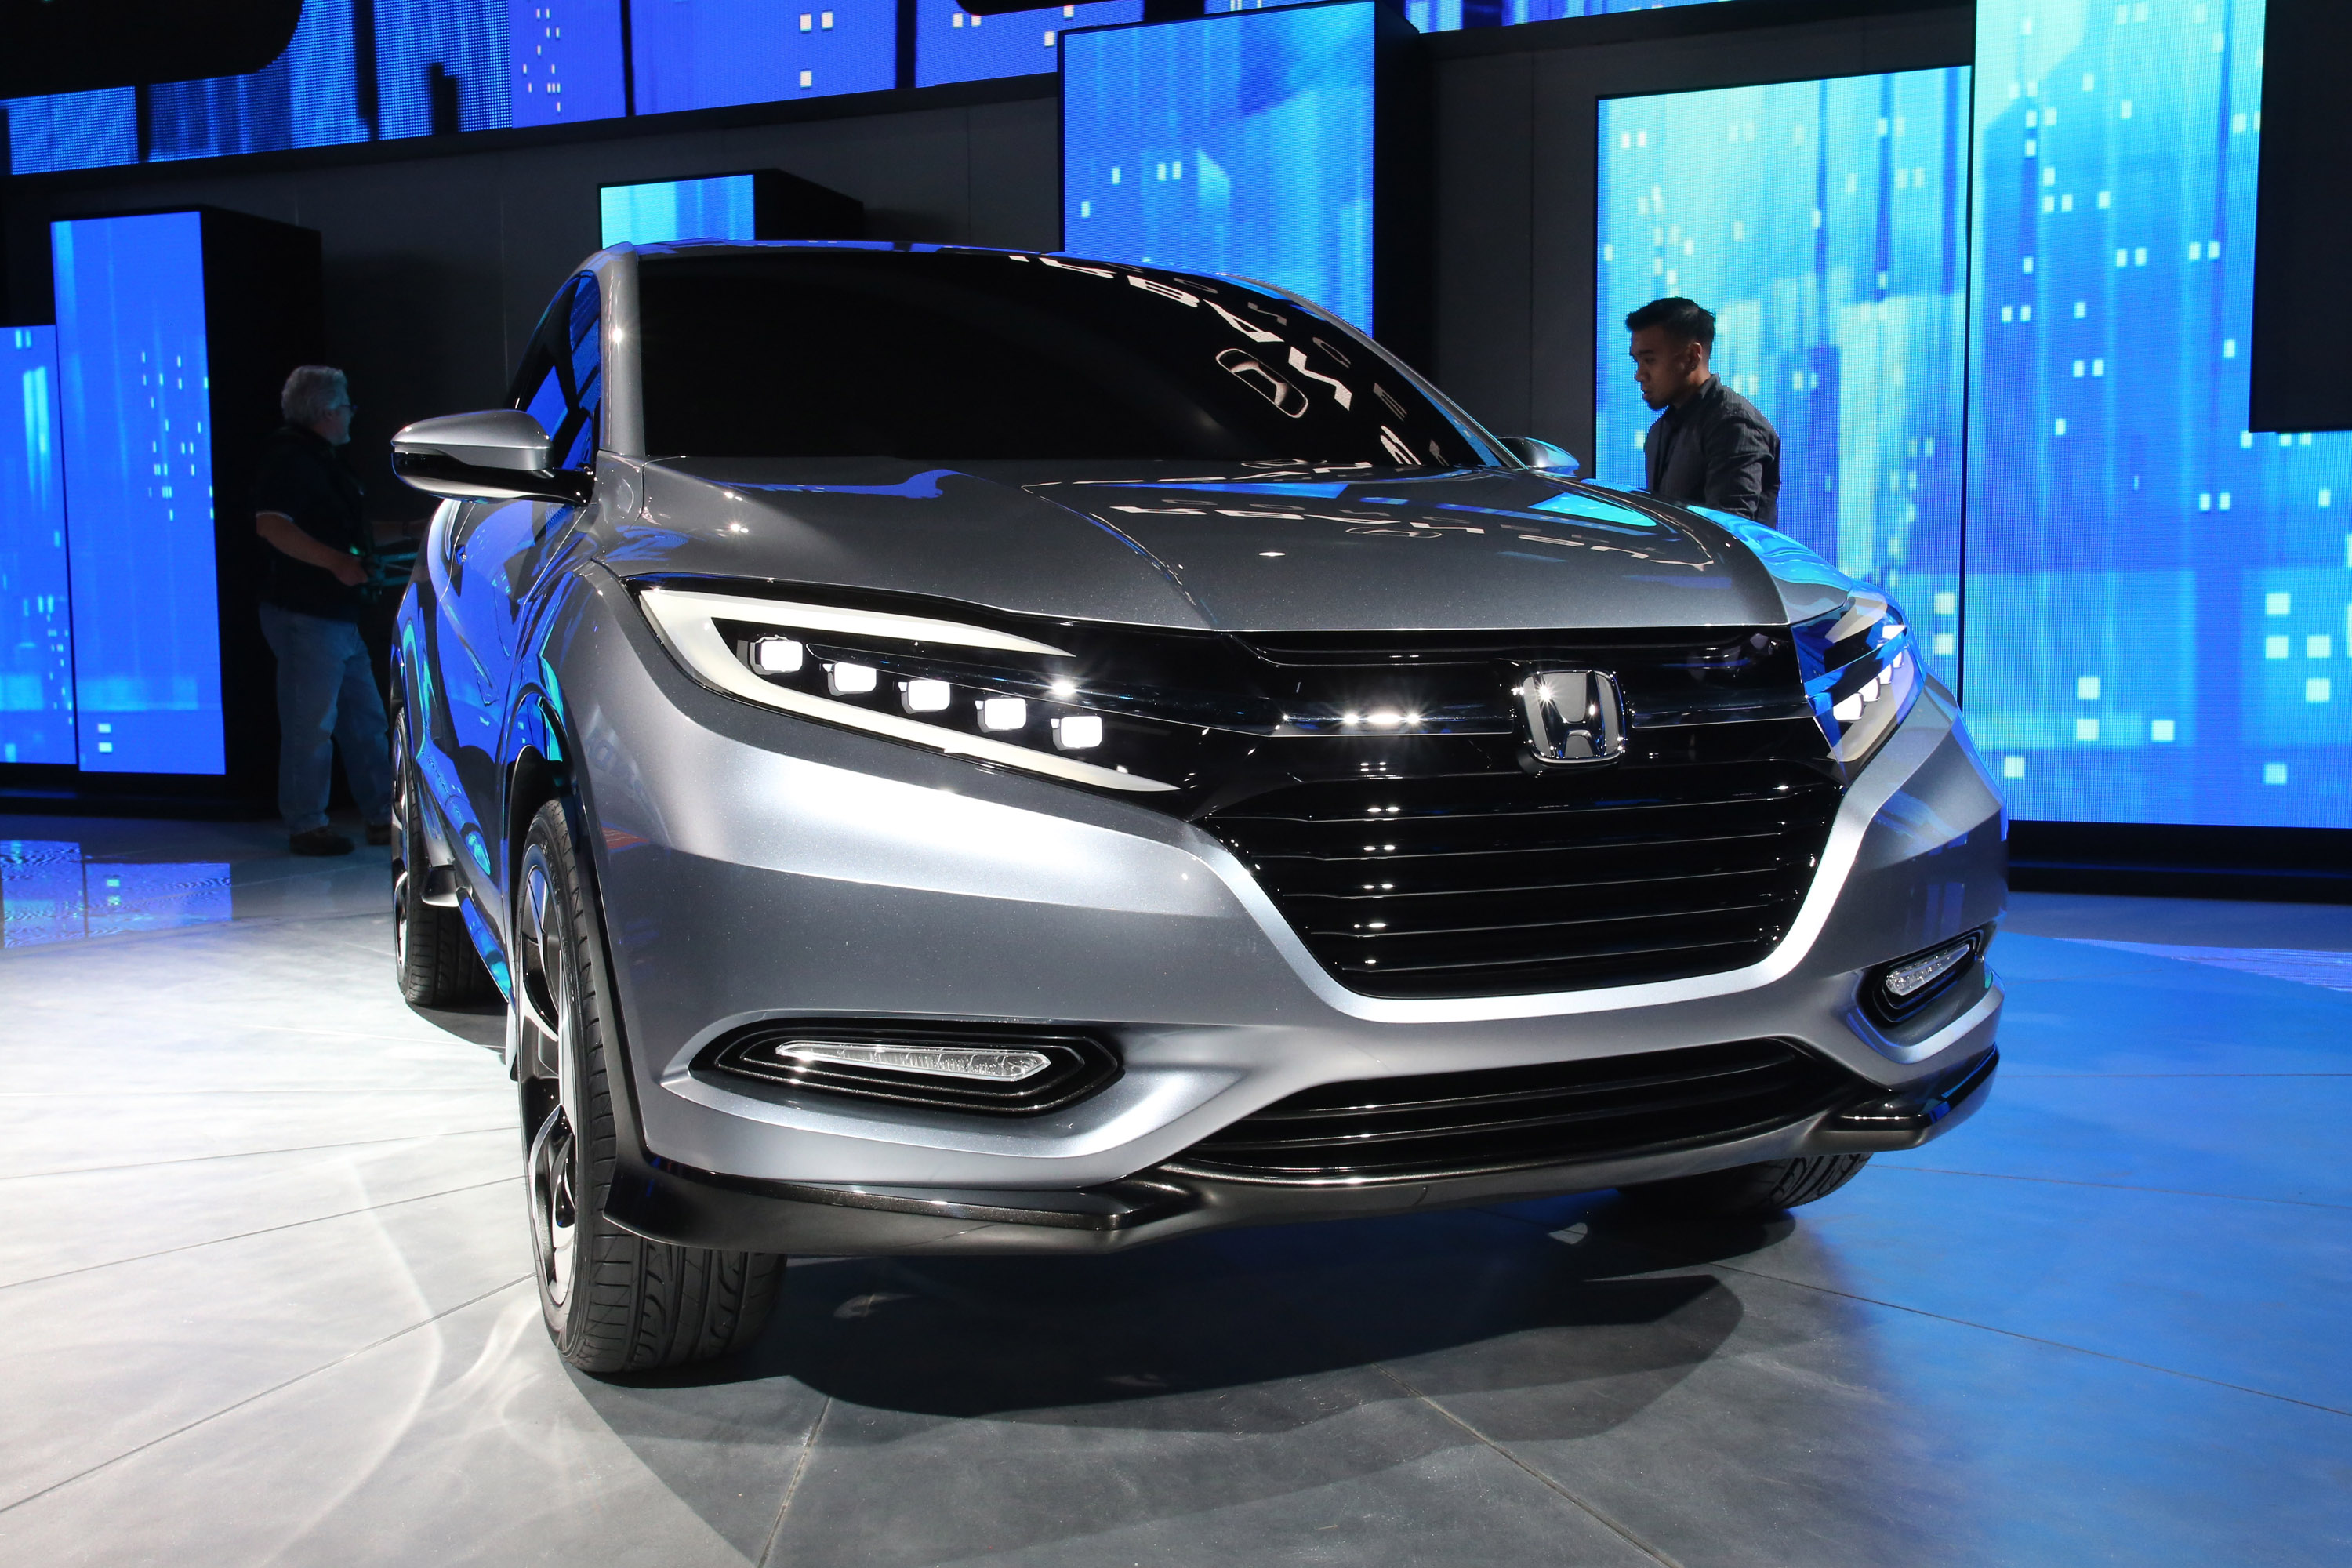 Honda Urban SUV Concept Detroit